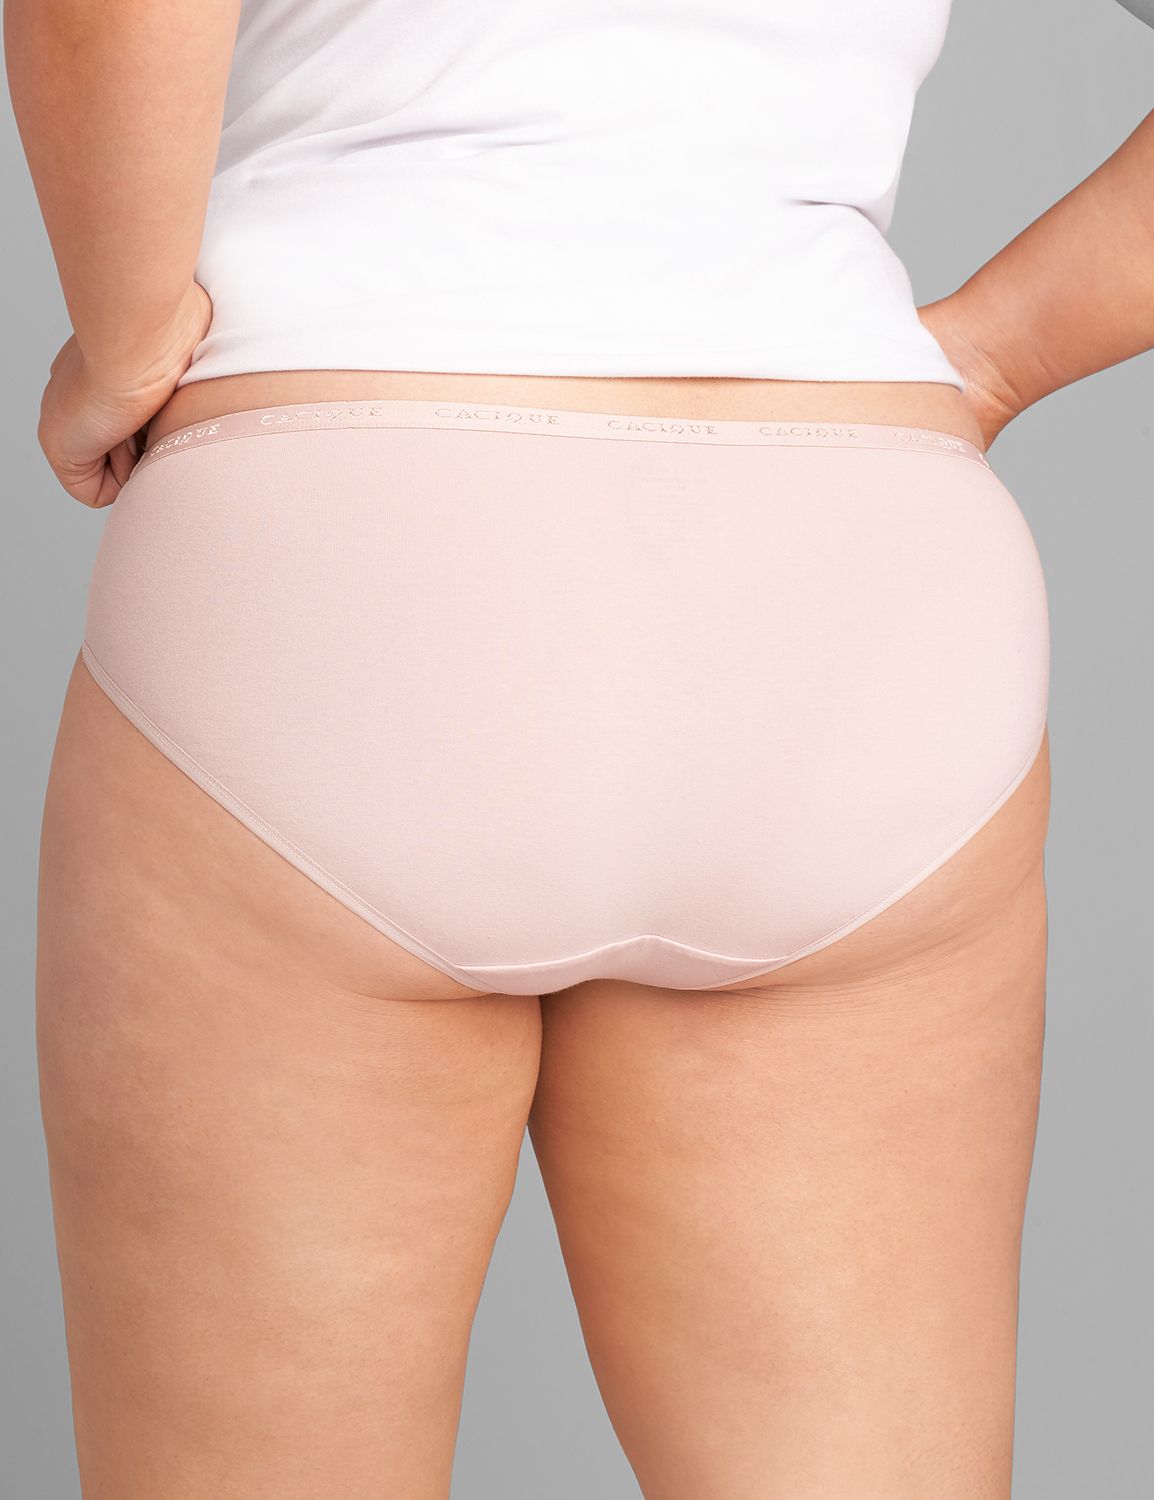 Lane Bryant Cacique Cotton Full Brief Panties Underwear Striped Pink White  18 20